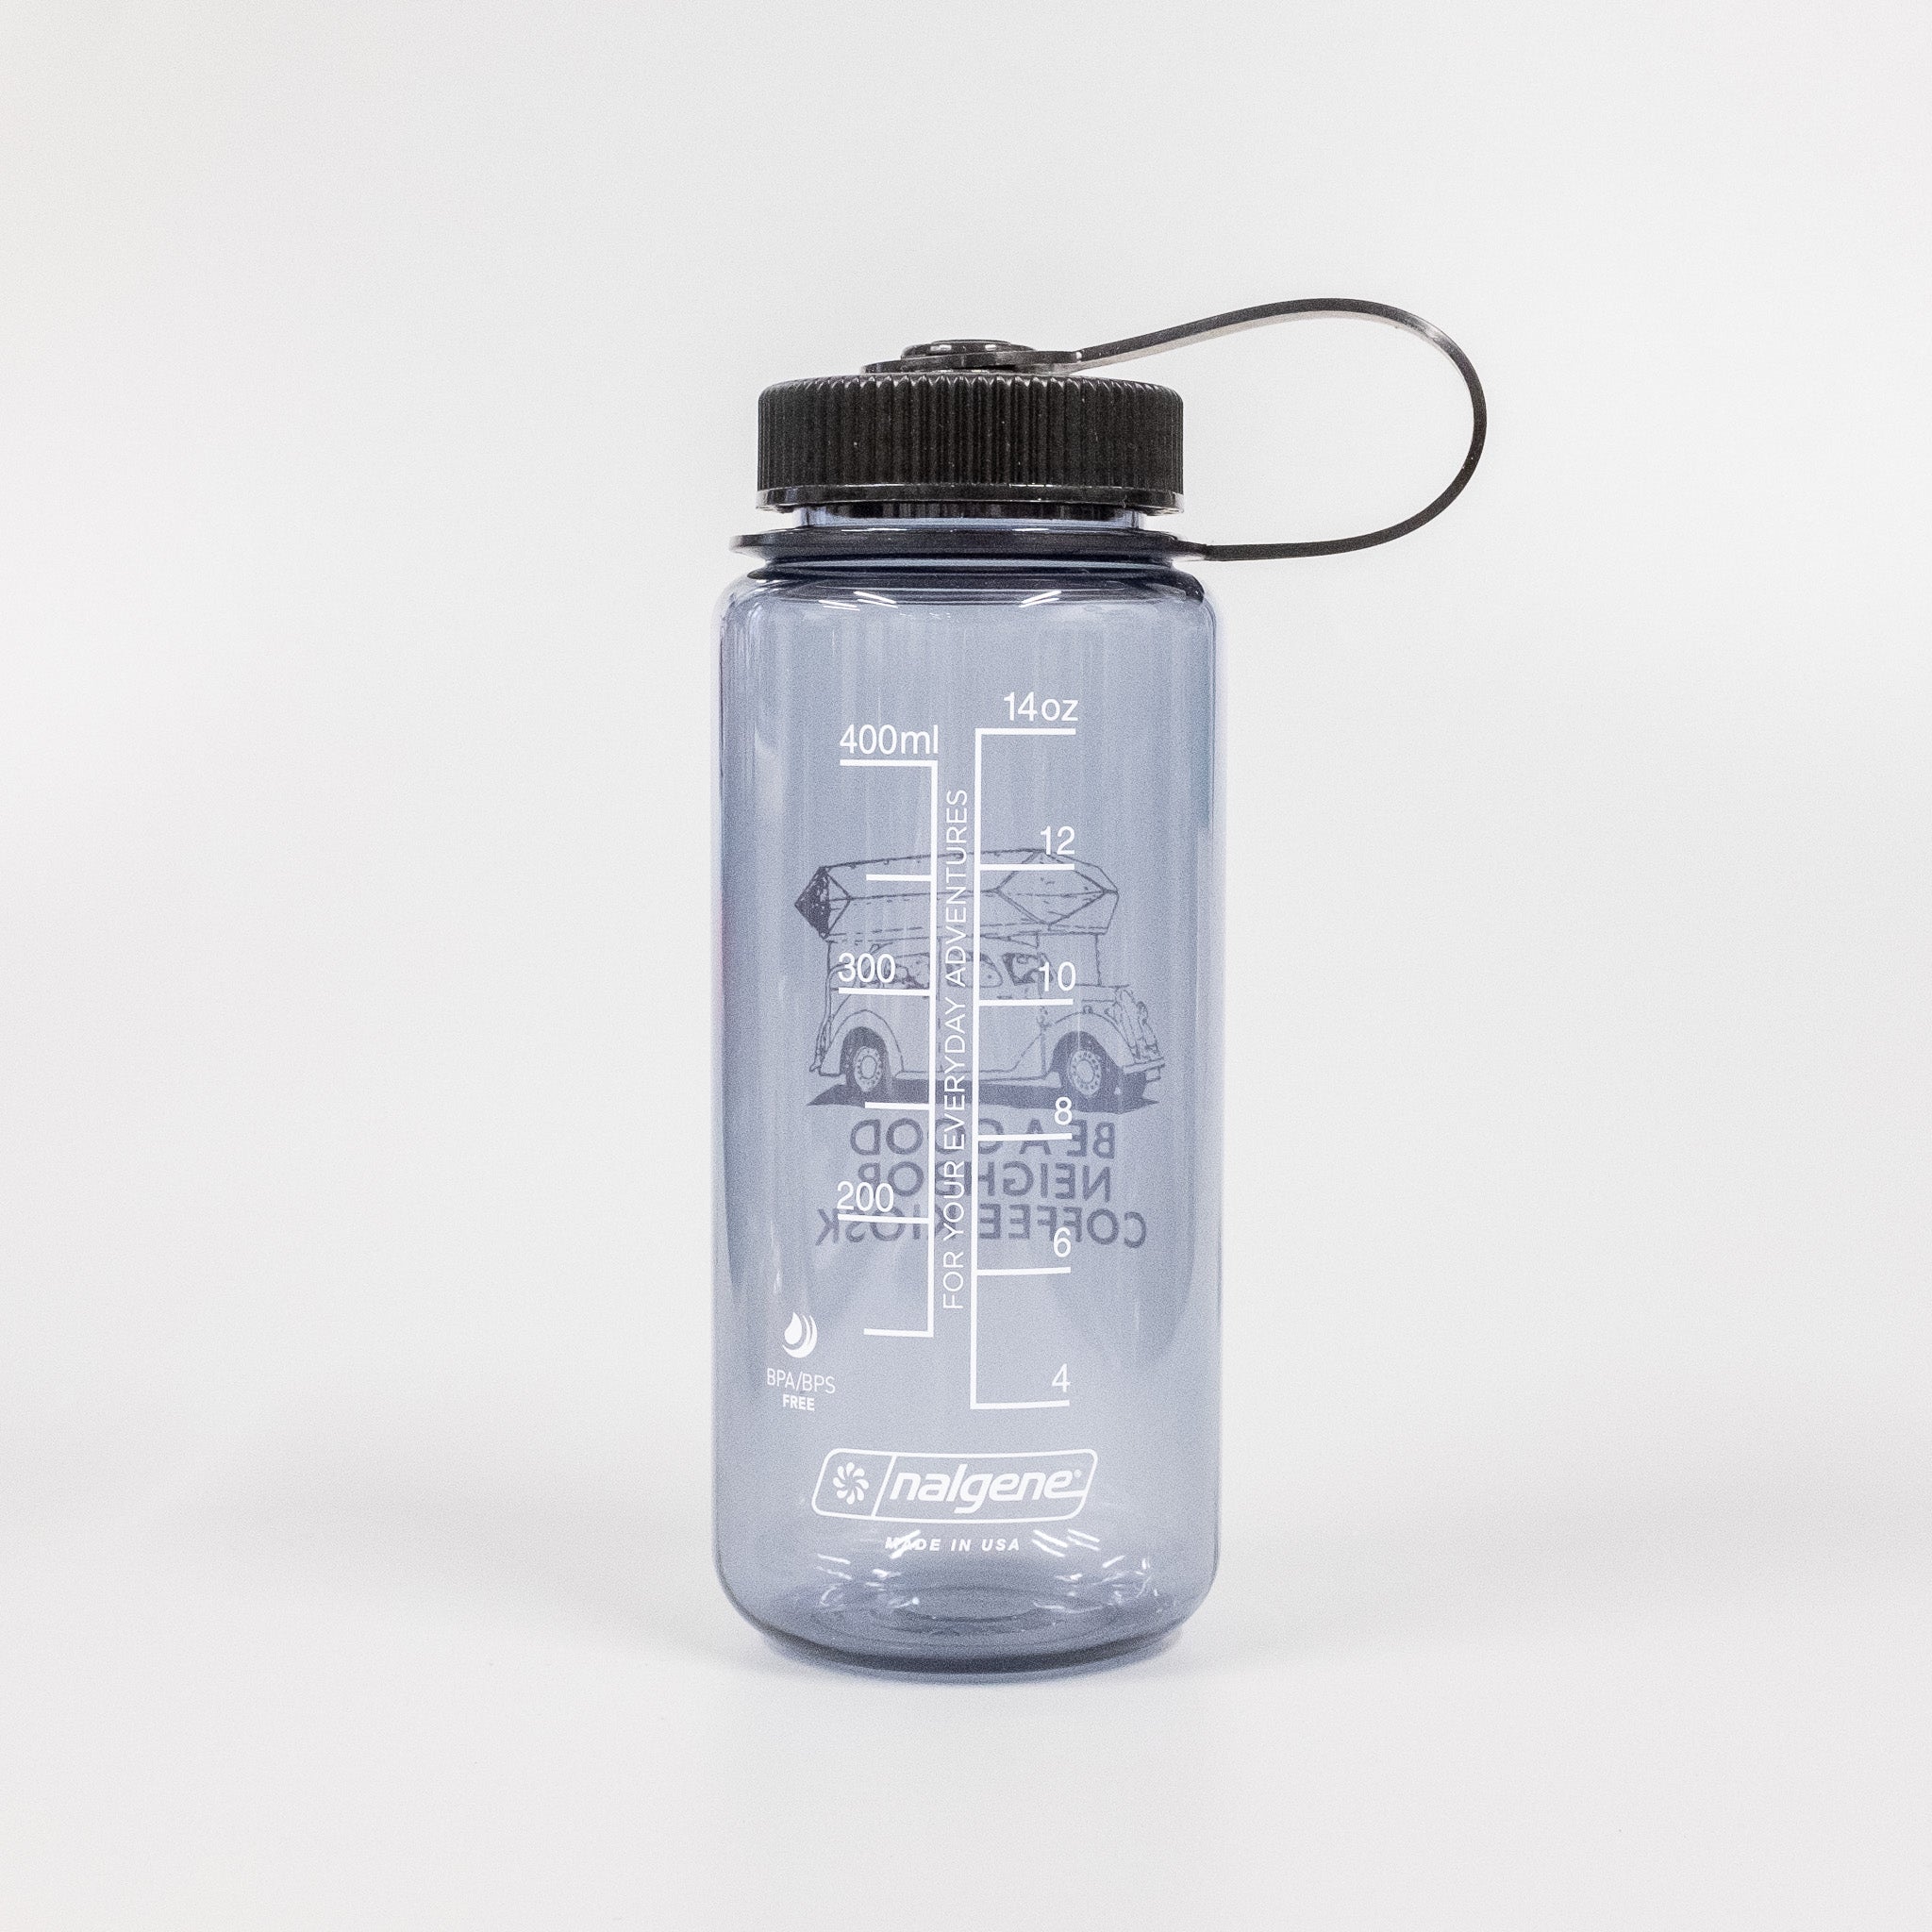 NALGENE(ナルゲン) 薬品瓶(PP製) 10L 5-048-01 通販